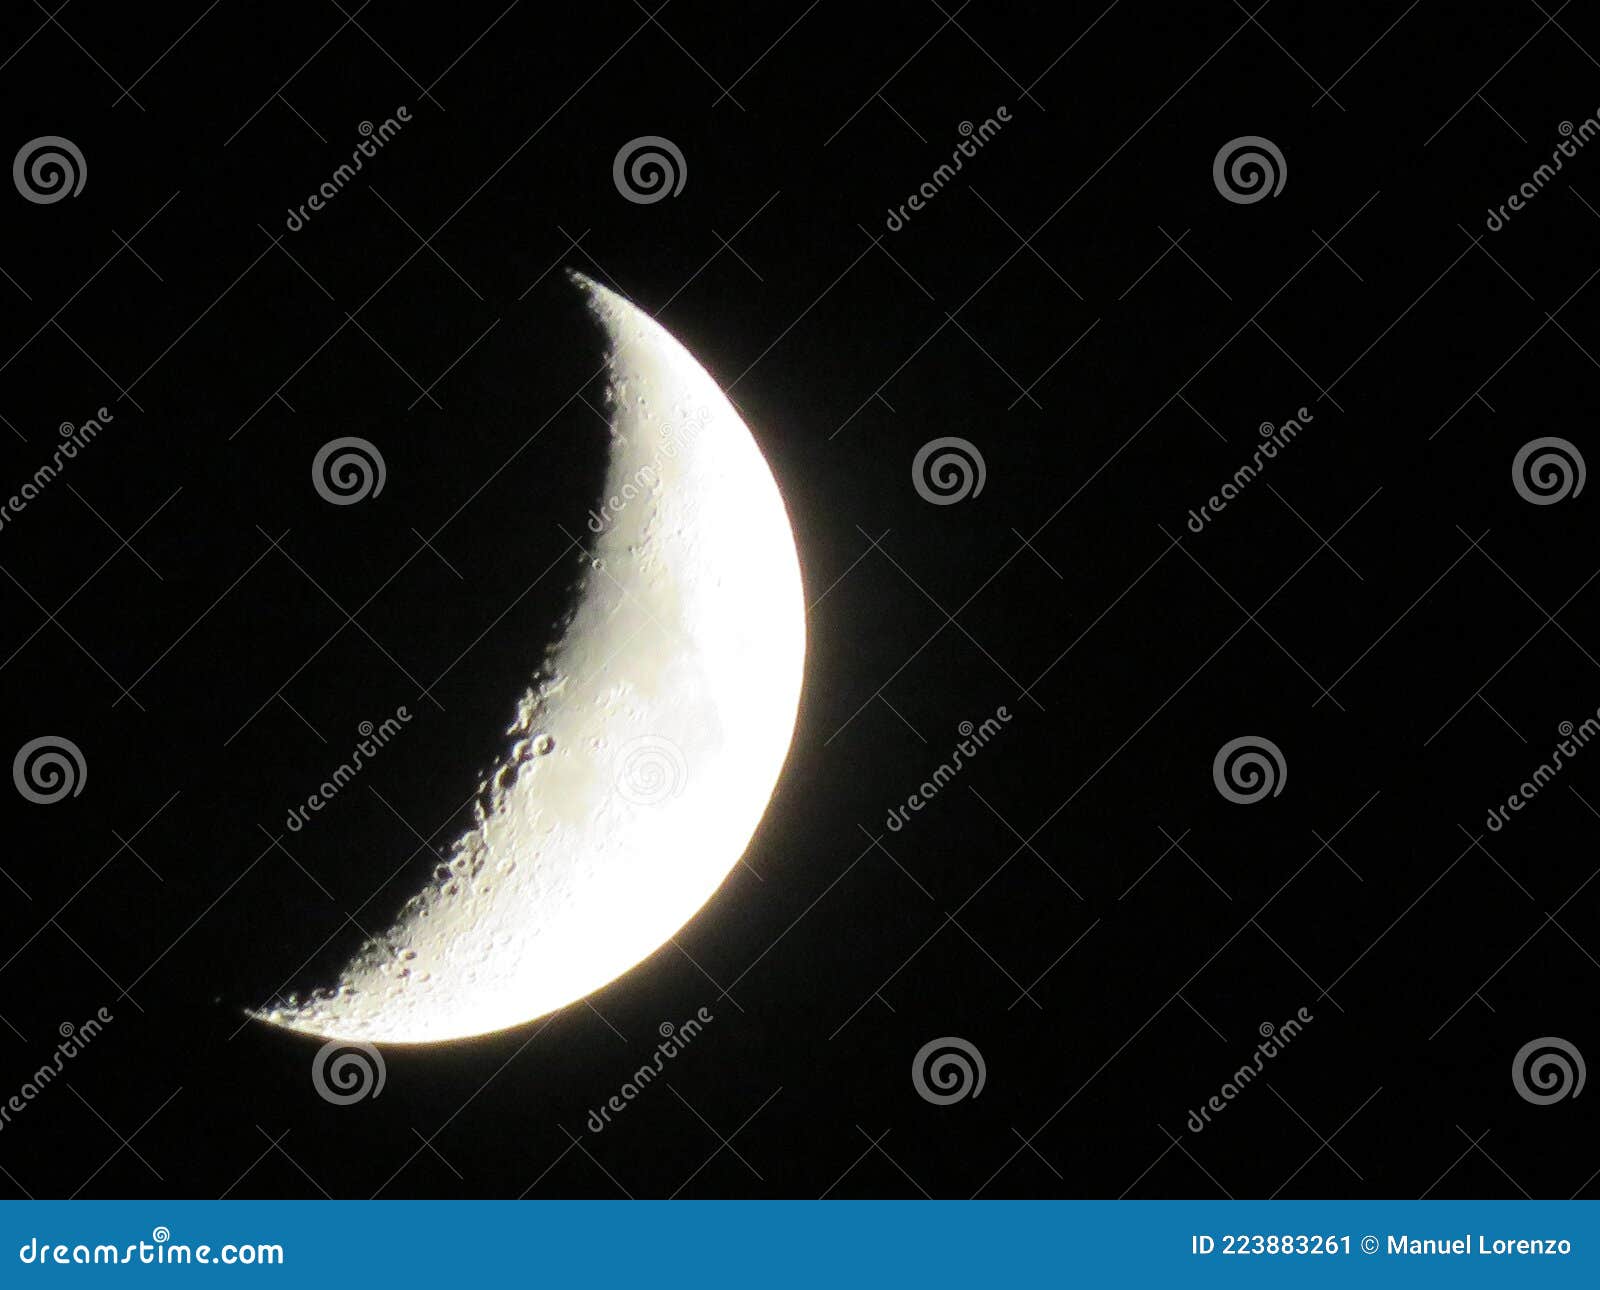 moon in growing room with satellite craters night sleep